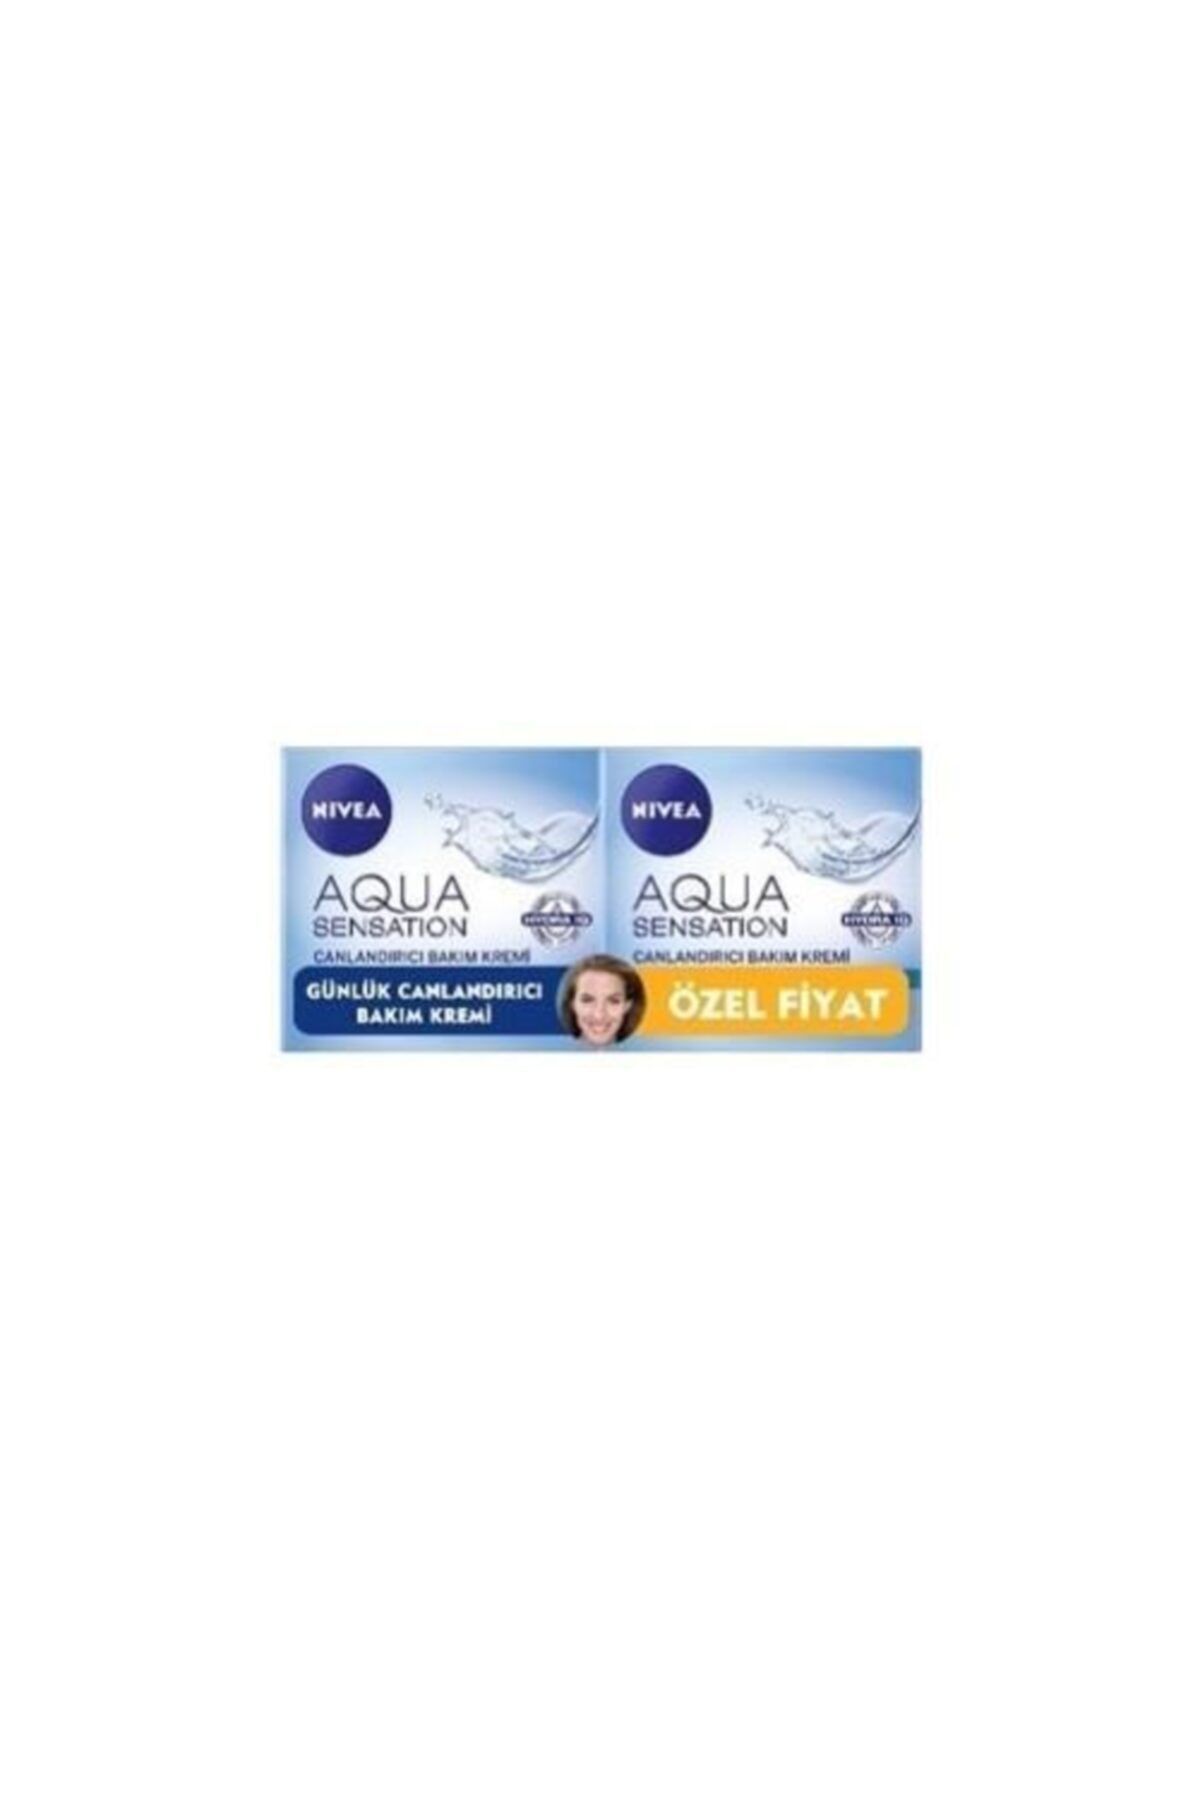 NIVEA Aqua Sensation Canlandırıcı Bakım Kremi 50 ml X 2 Adet